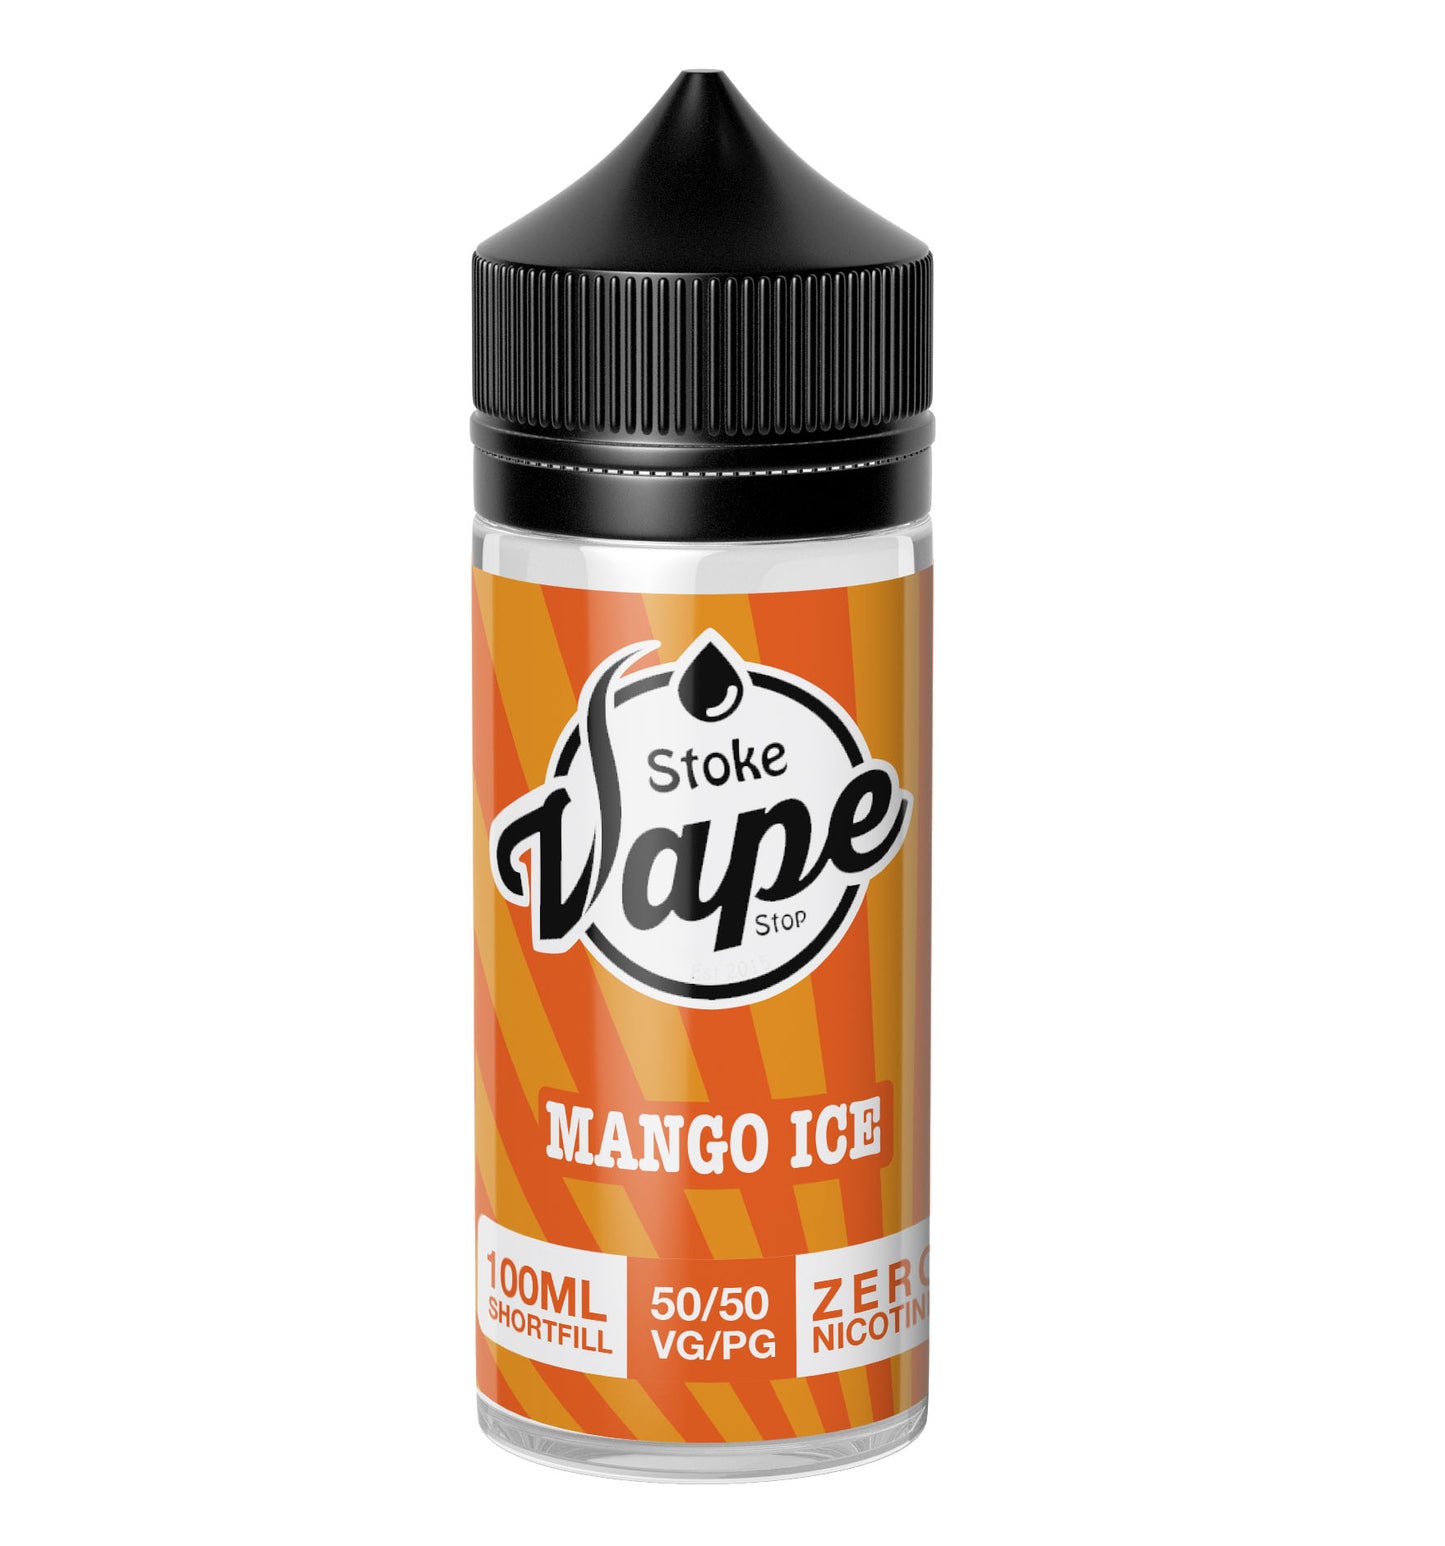 Mango Ice 50/50 STOKE VAPE STOP - 100ML